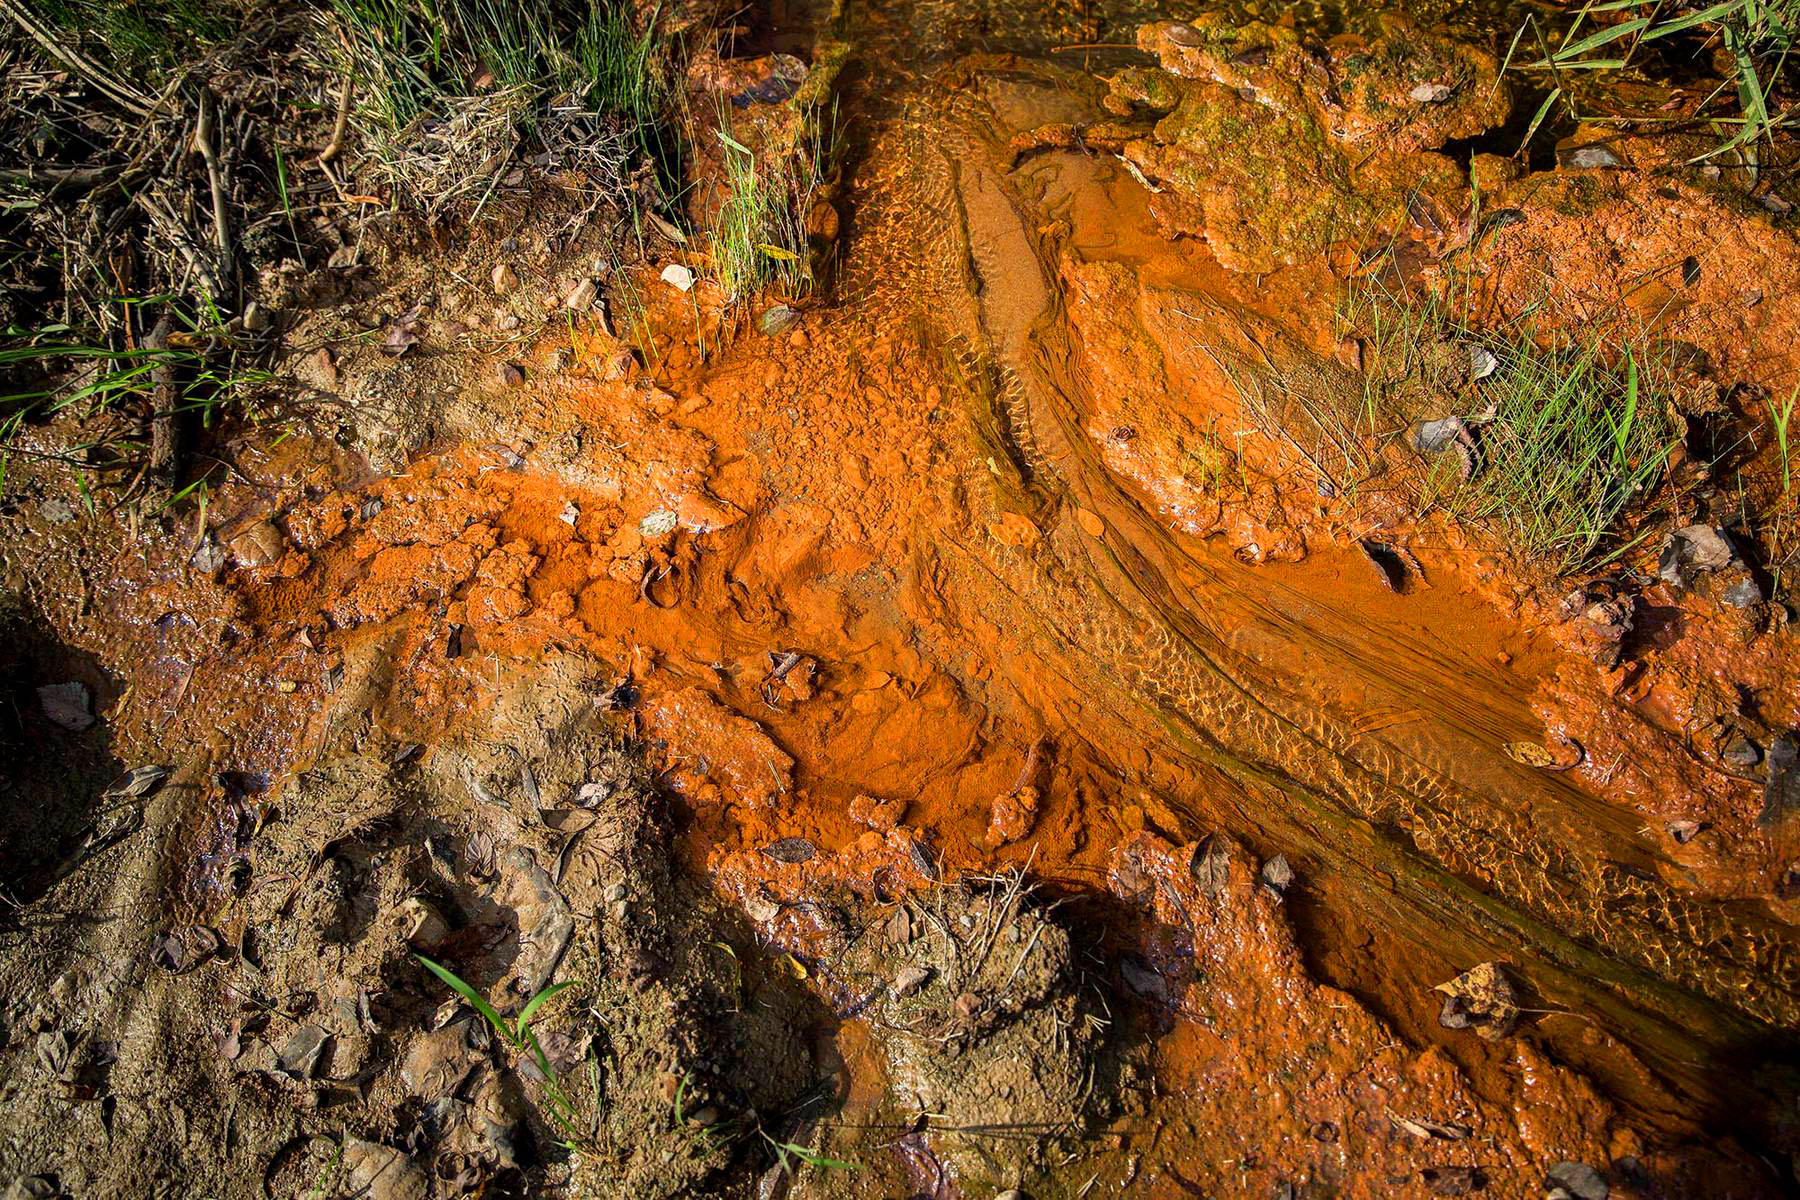 Orange sludge oozing through dirt and grass.